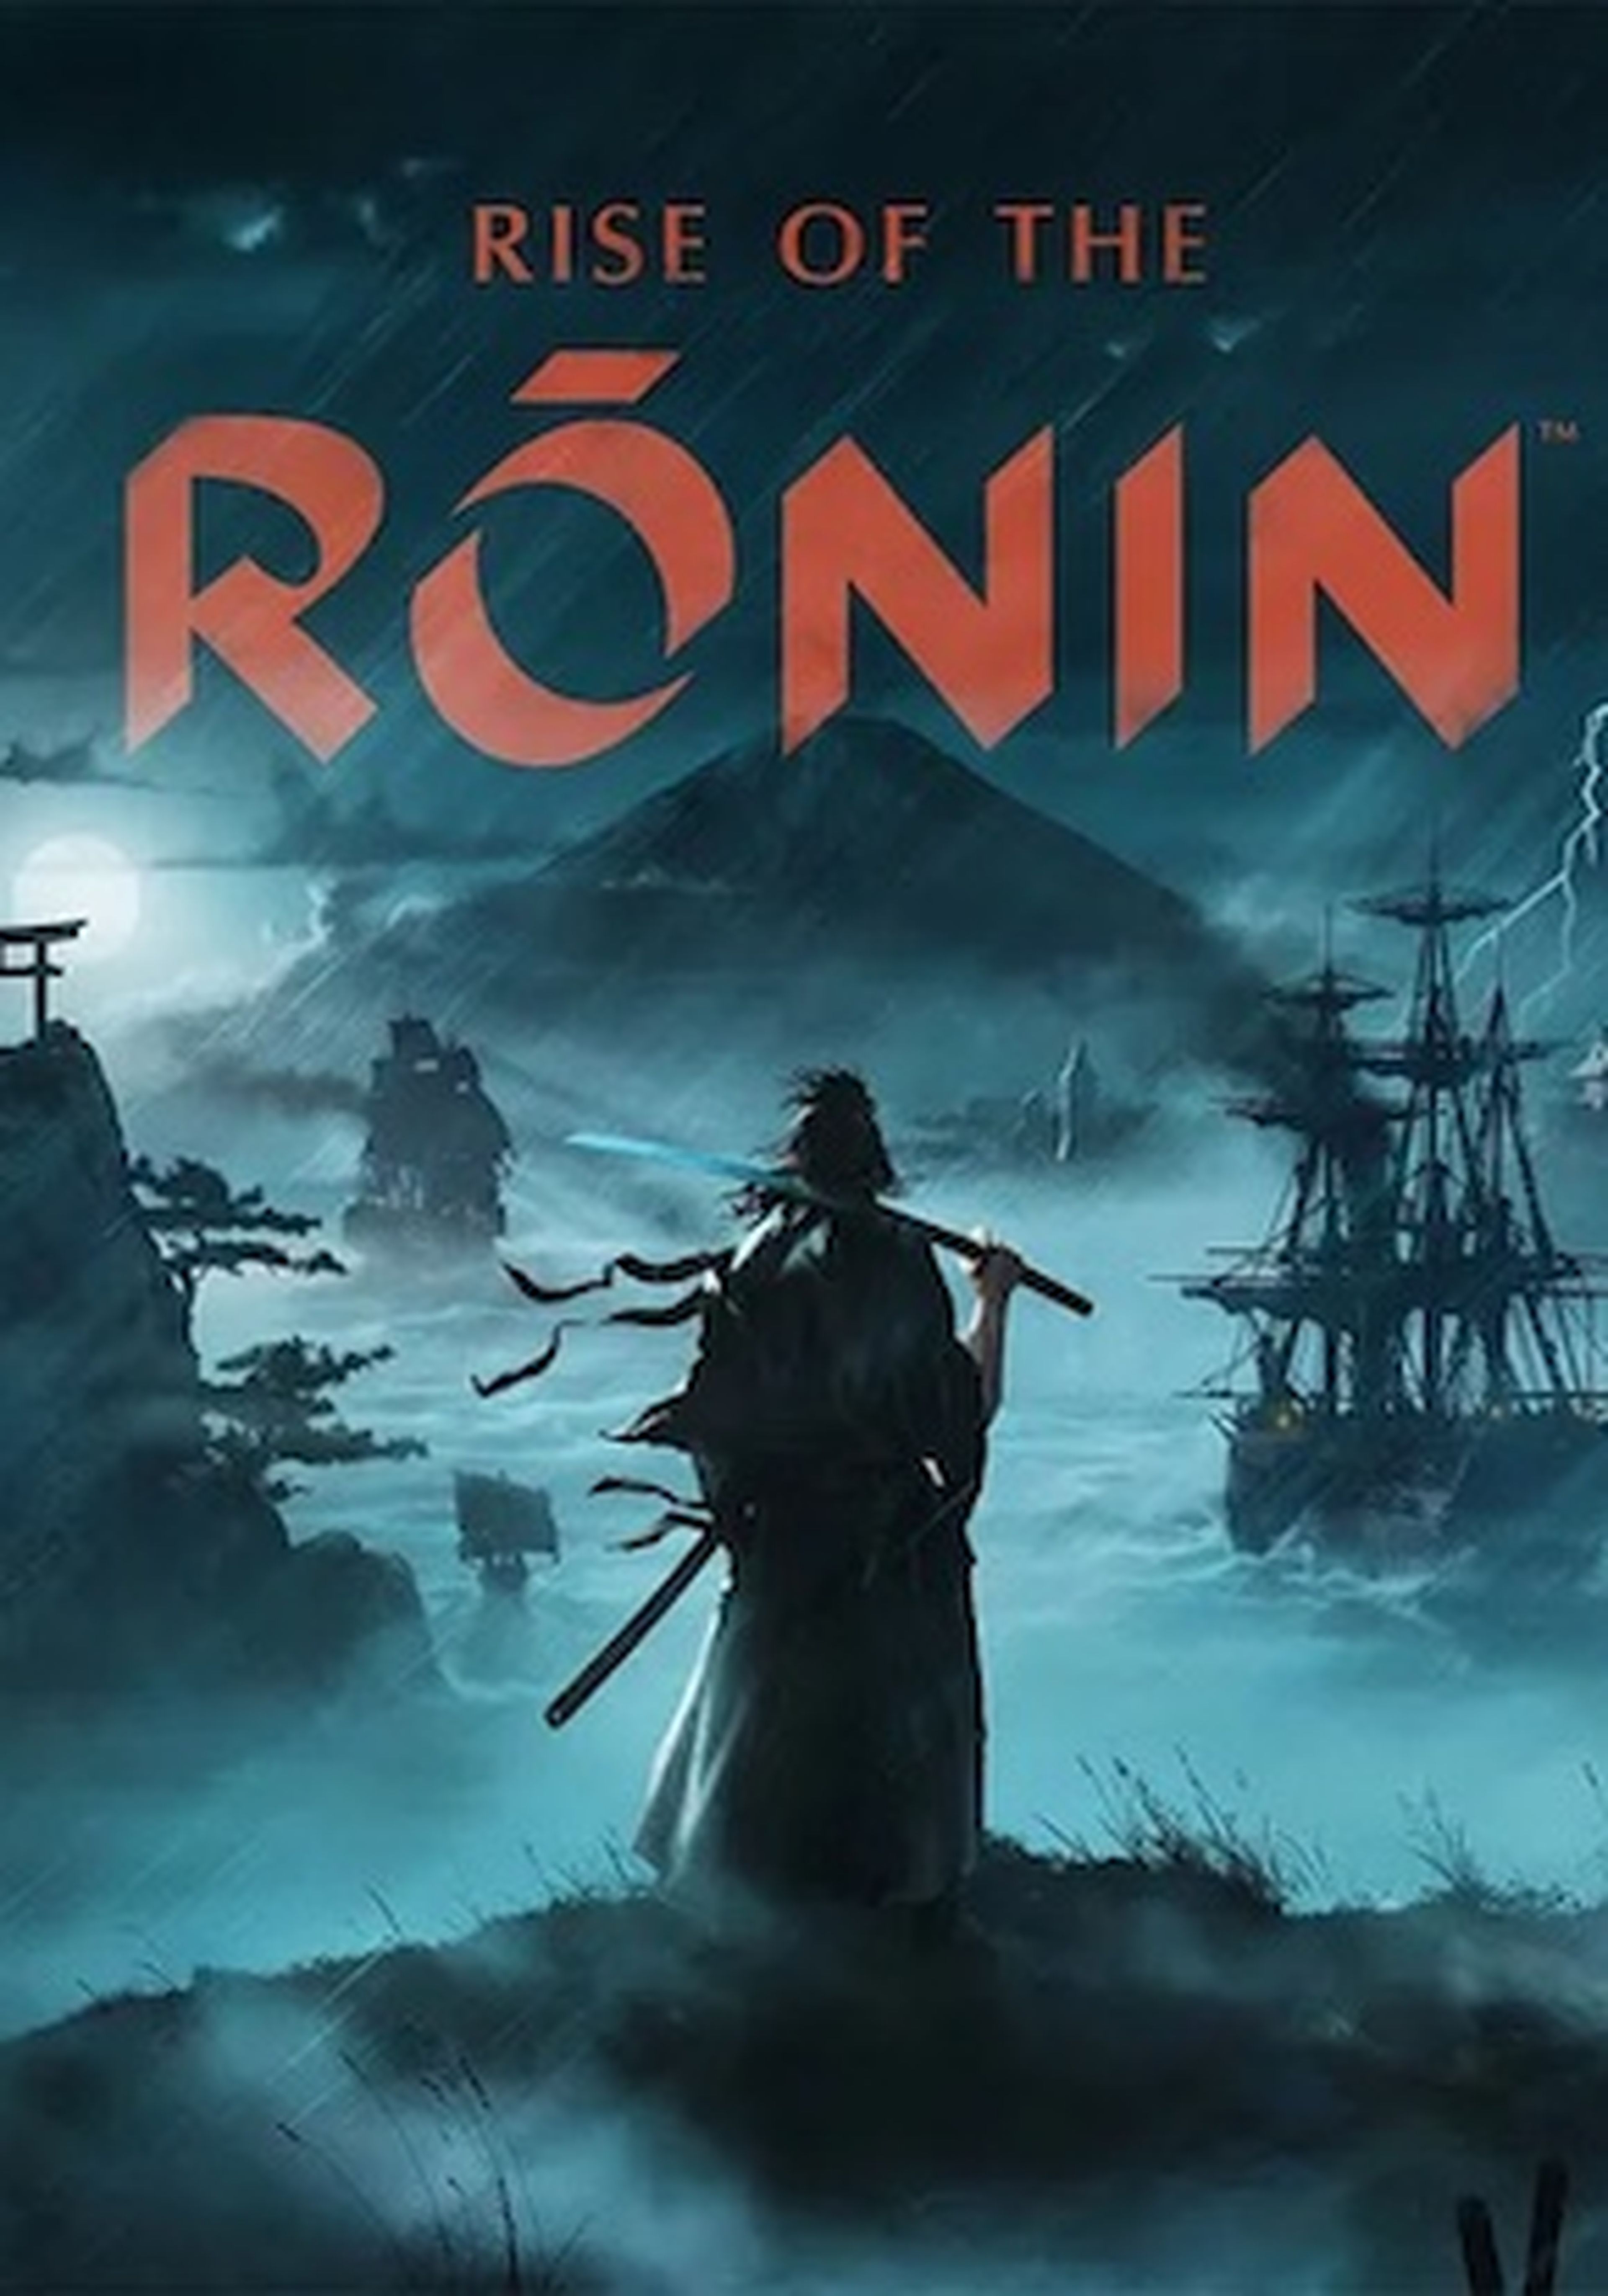 Reserva Rise of the Ronin en GAME y llévate un DLC con contenido adicional  - Blansi